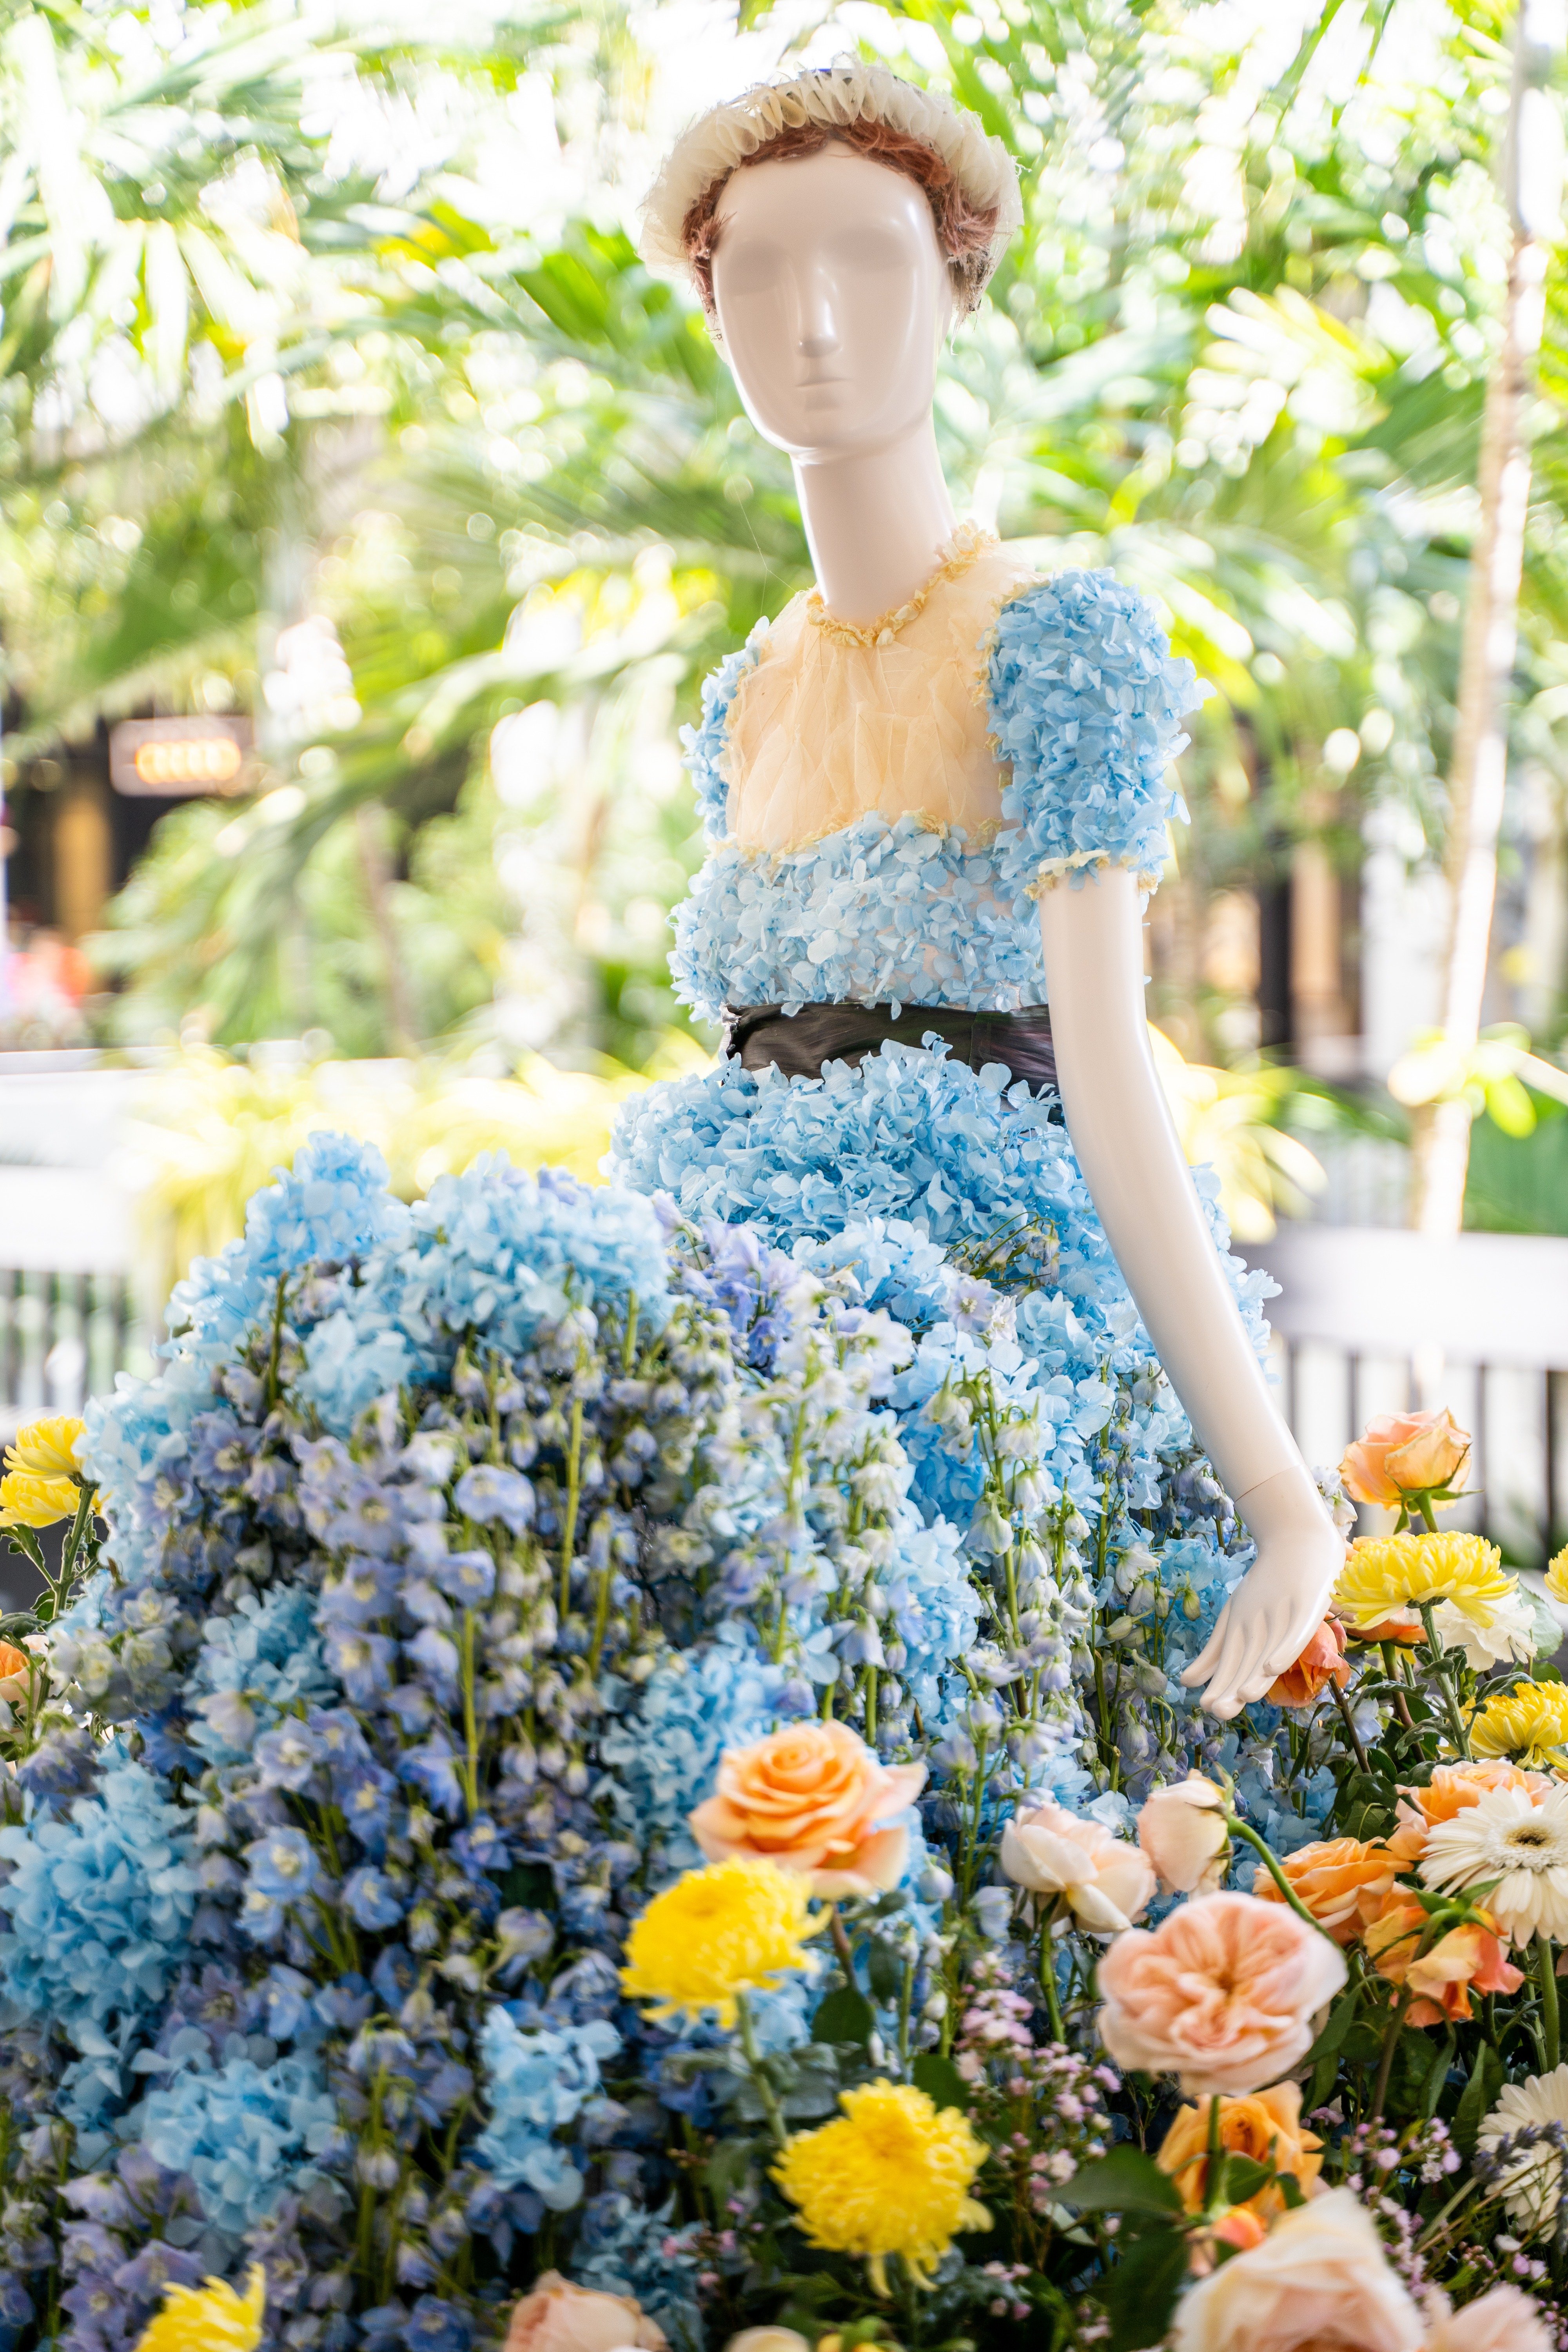 Floral mannequin inspired by Jane Austen